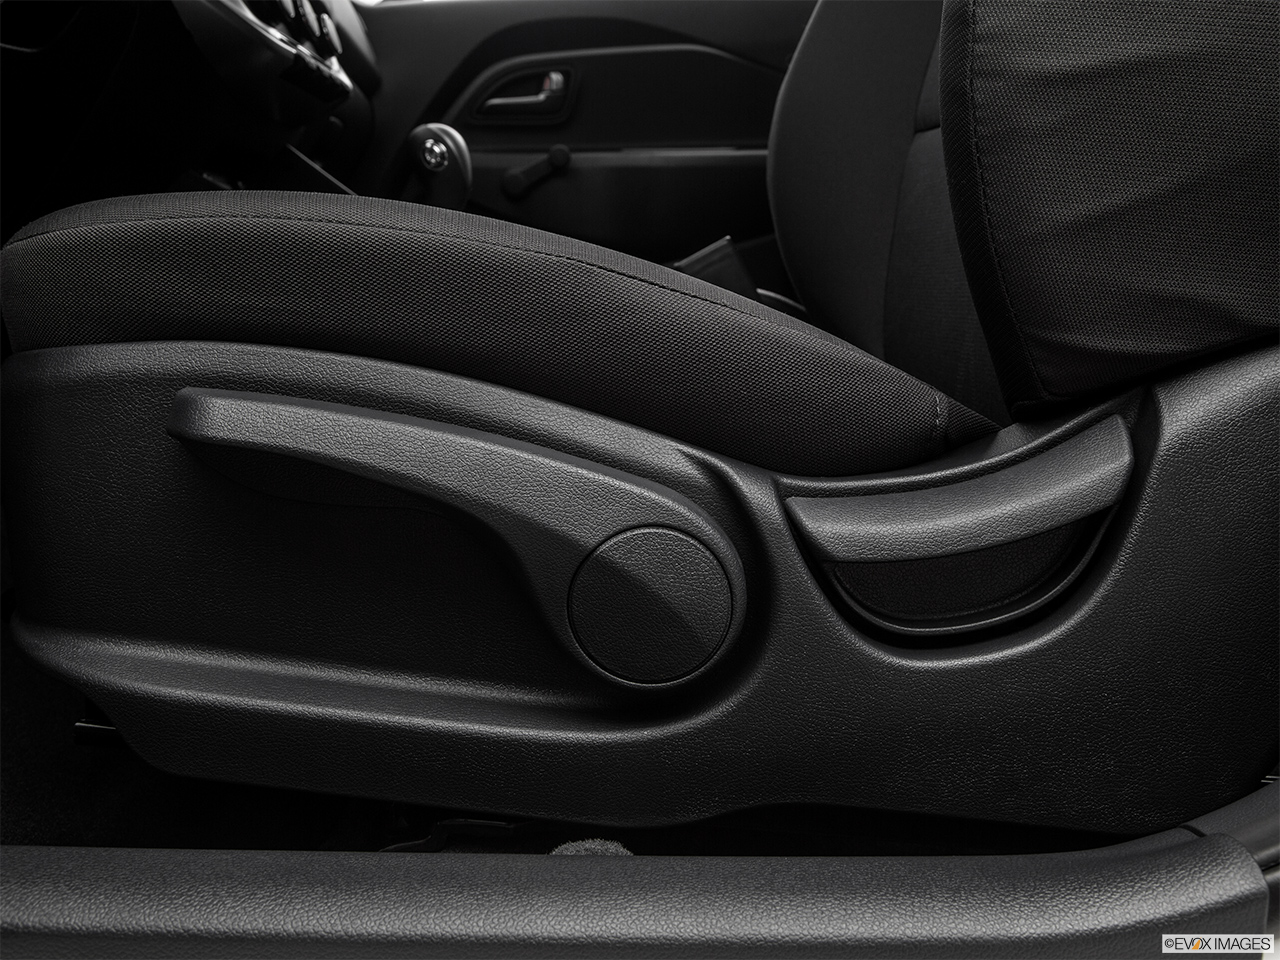 2017 Kia Rio 5-door LX Seat Adjustment Controllers. 